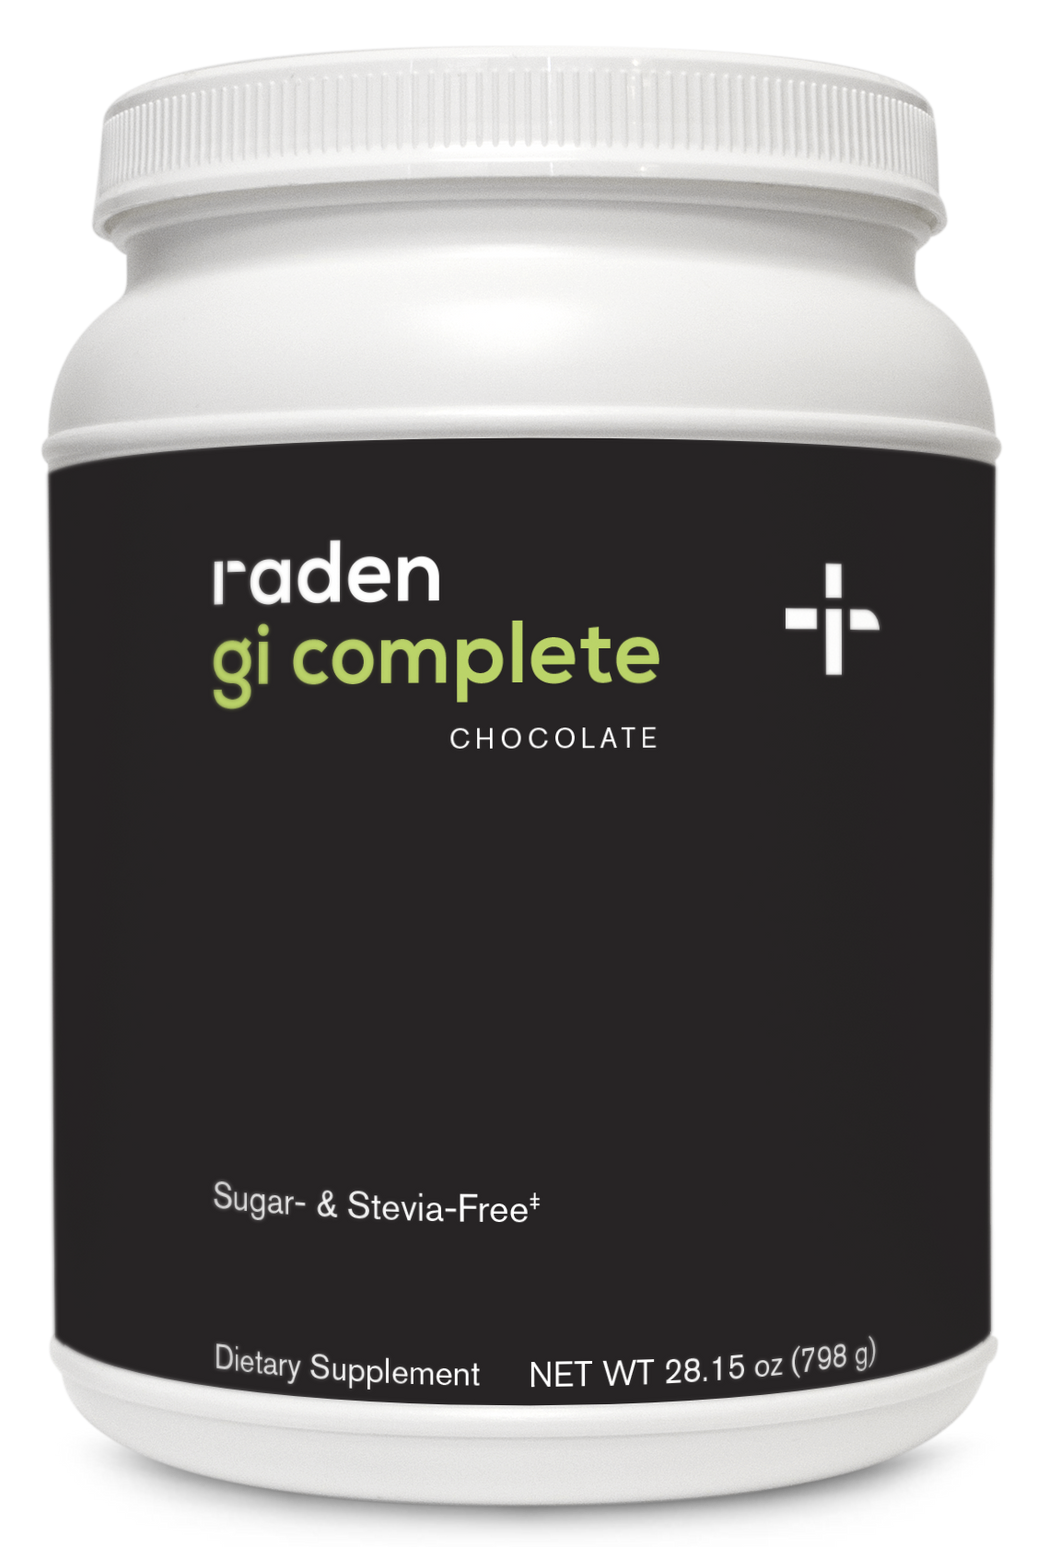 Raden, GI Complete Chocolate